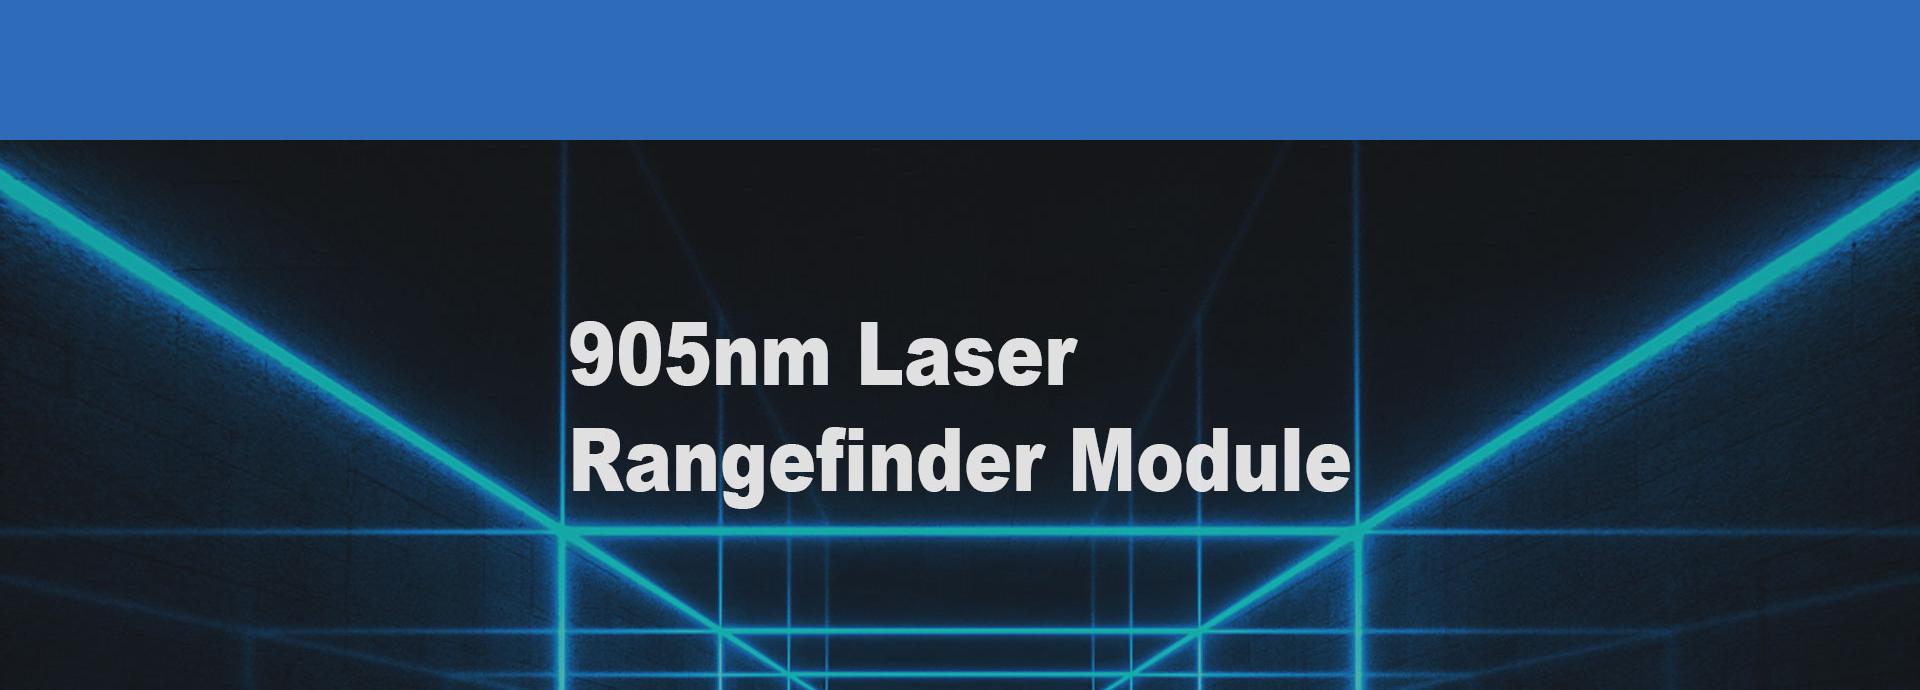 905nm-laser-range-finder-module